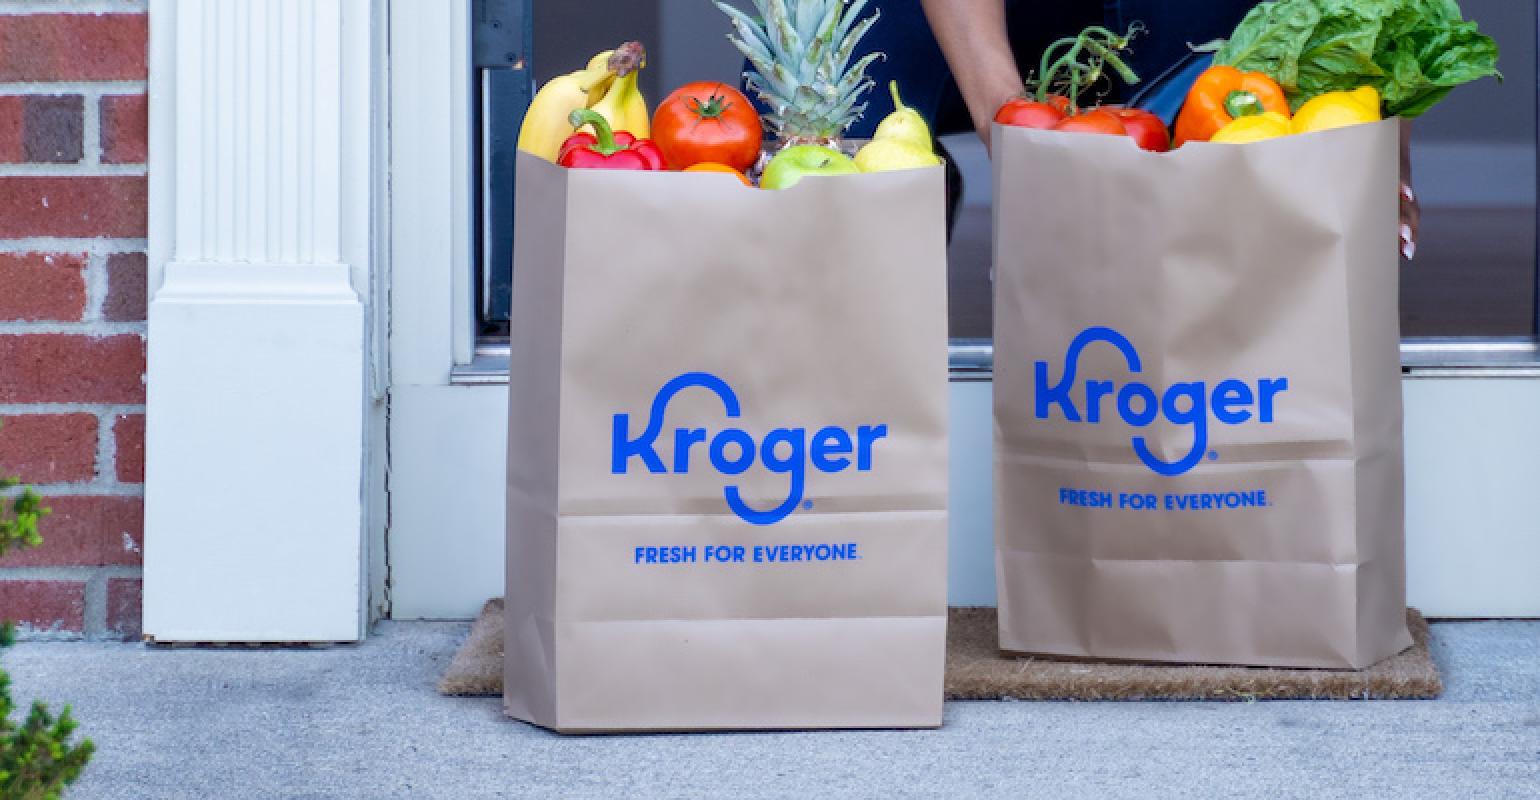 Online Grocery Delivery Service Near You - Order Groceries Online - Kroger